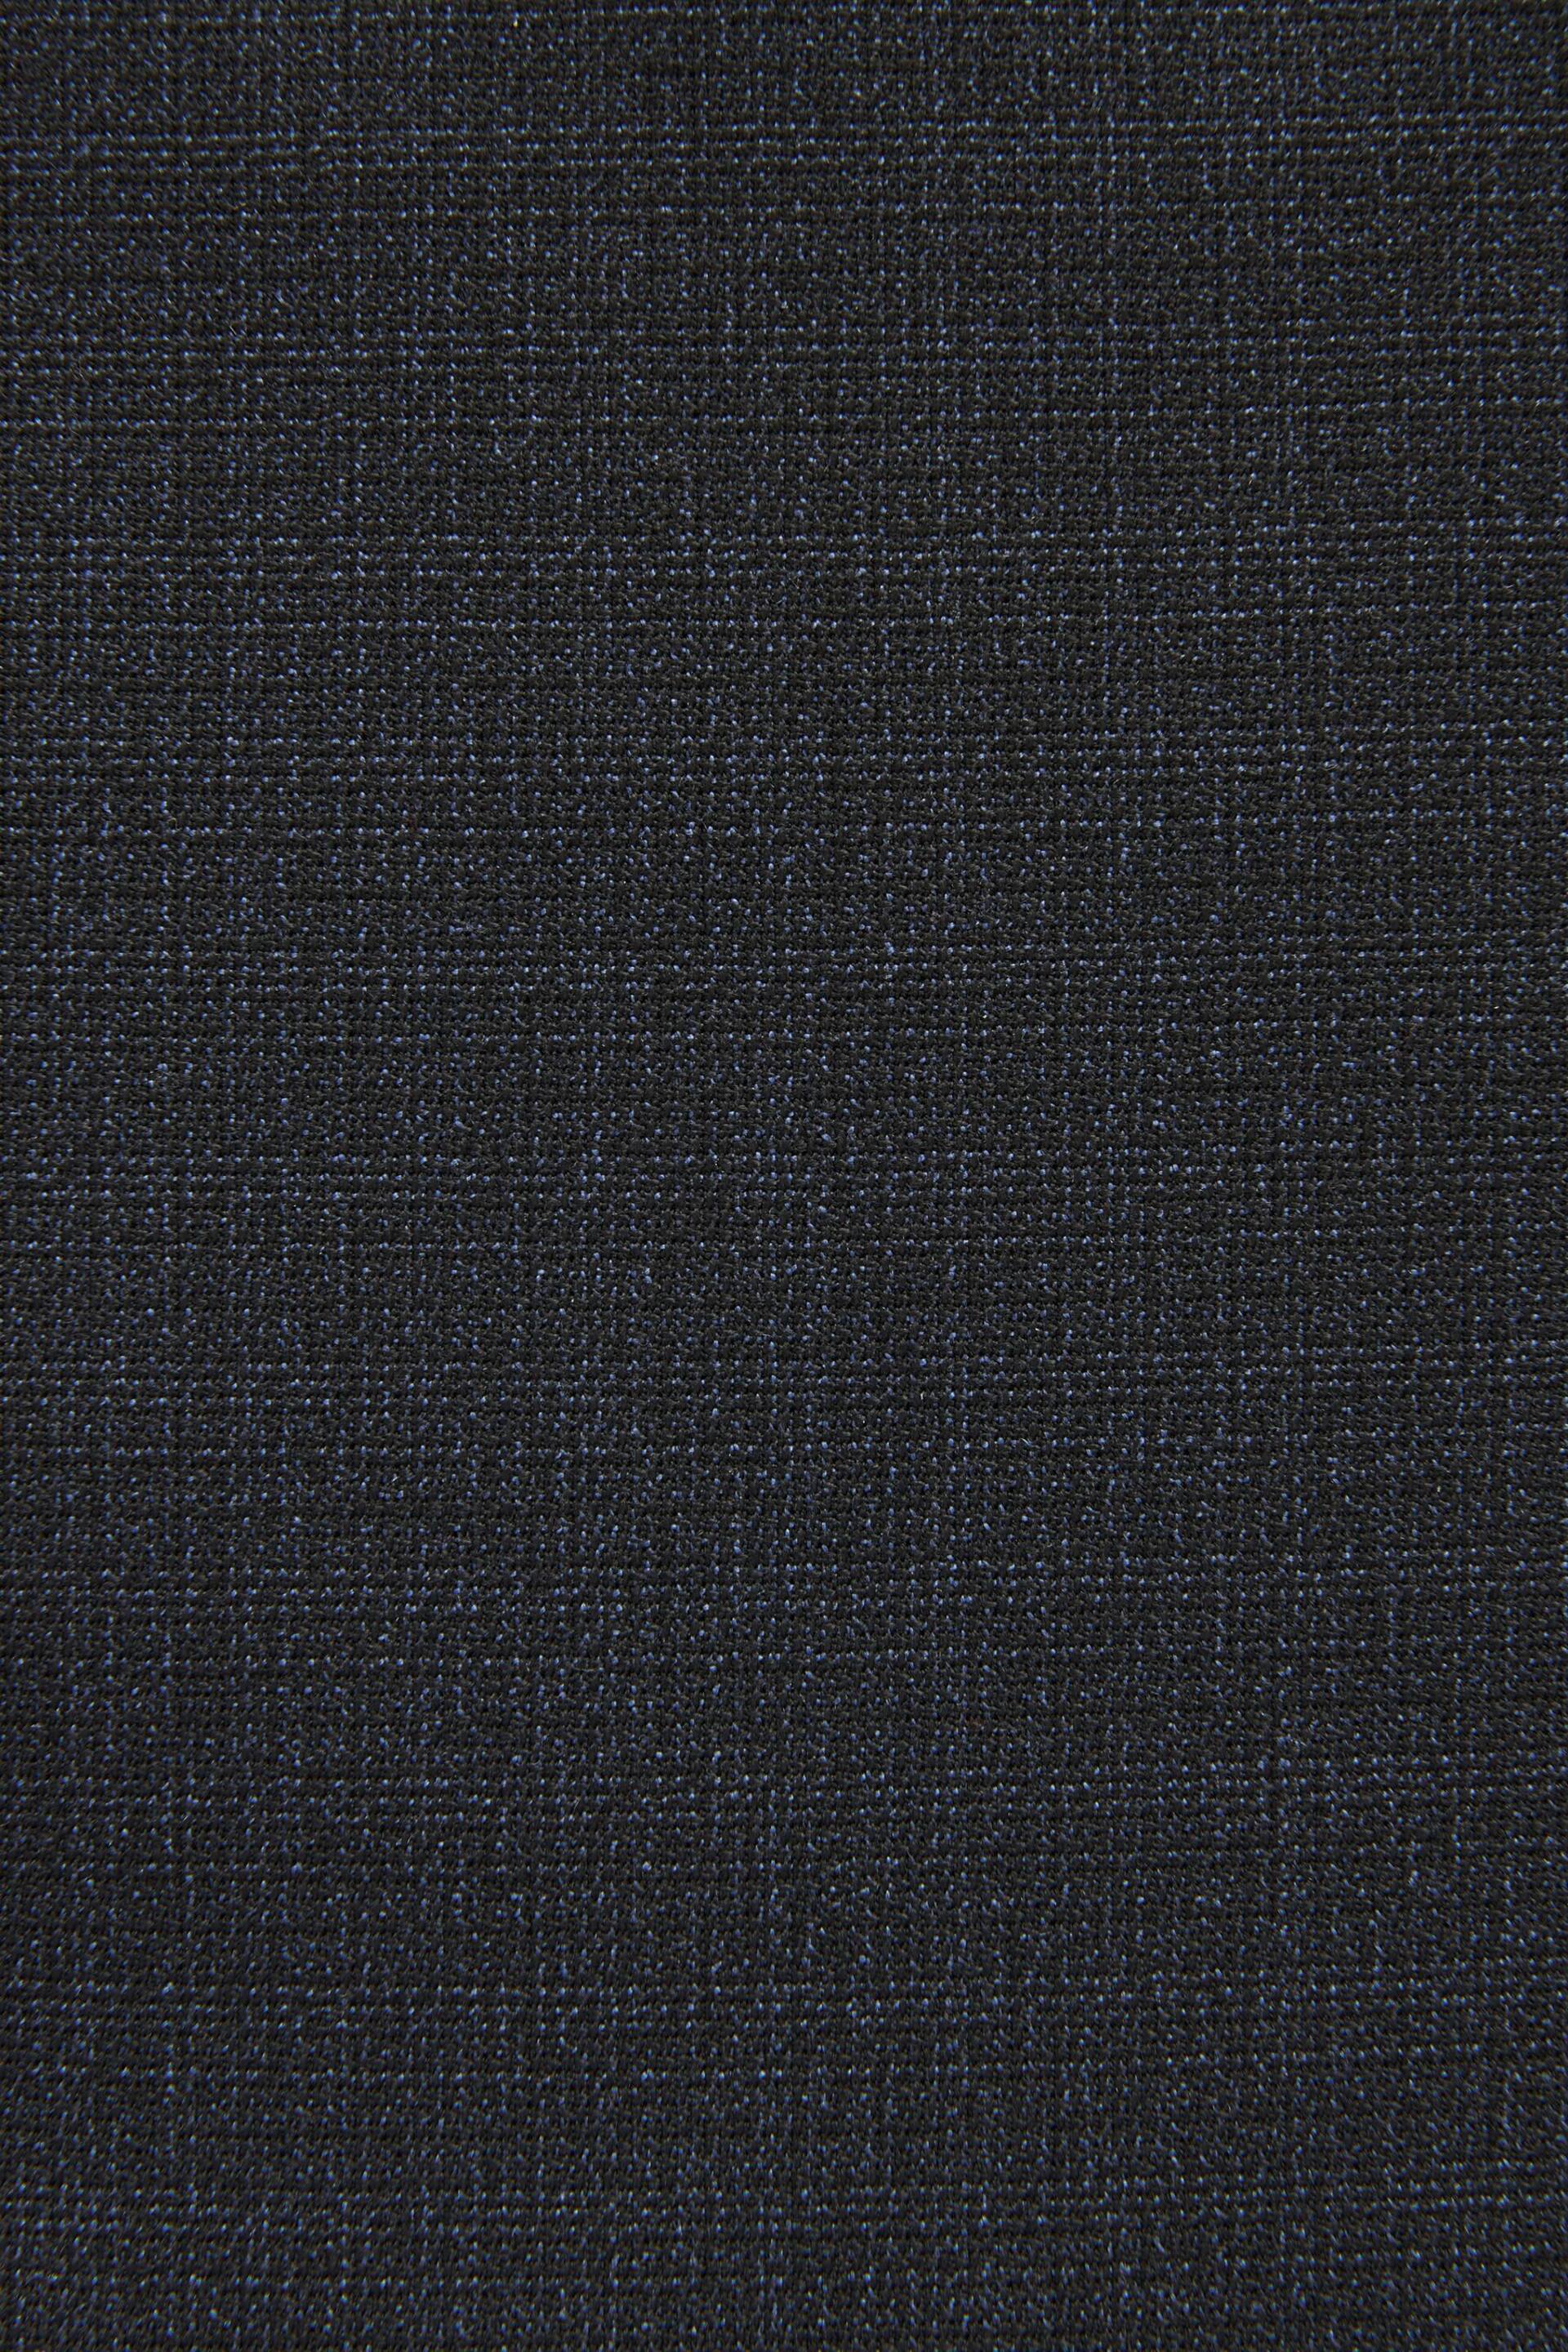 Navy Textured Wool Suit: Waistcoat - Image 7 of 10